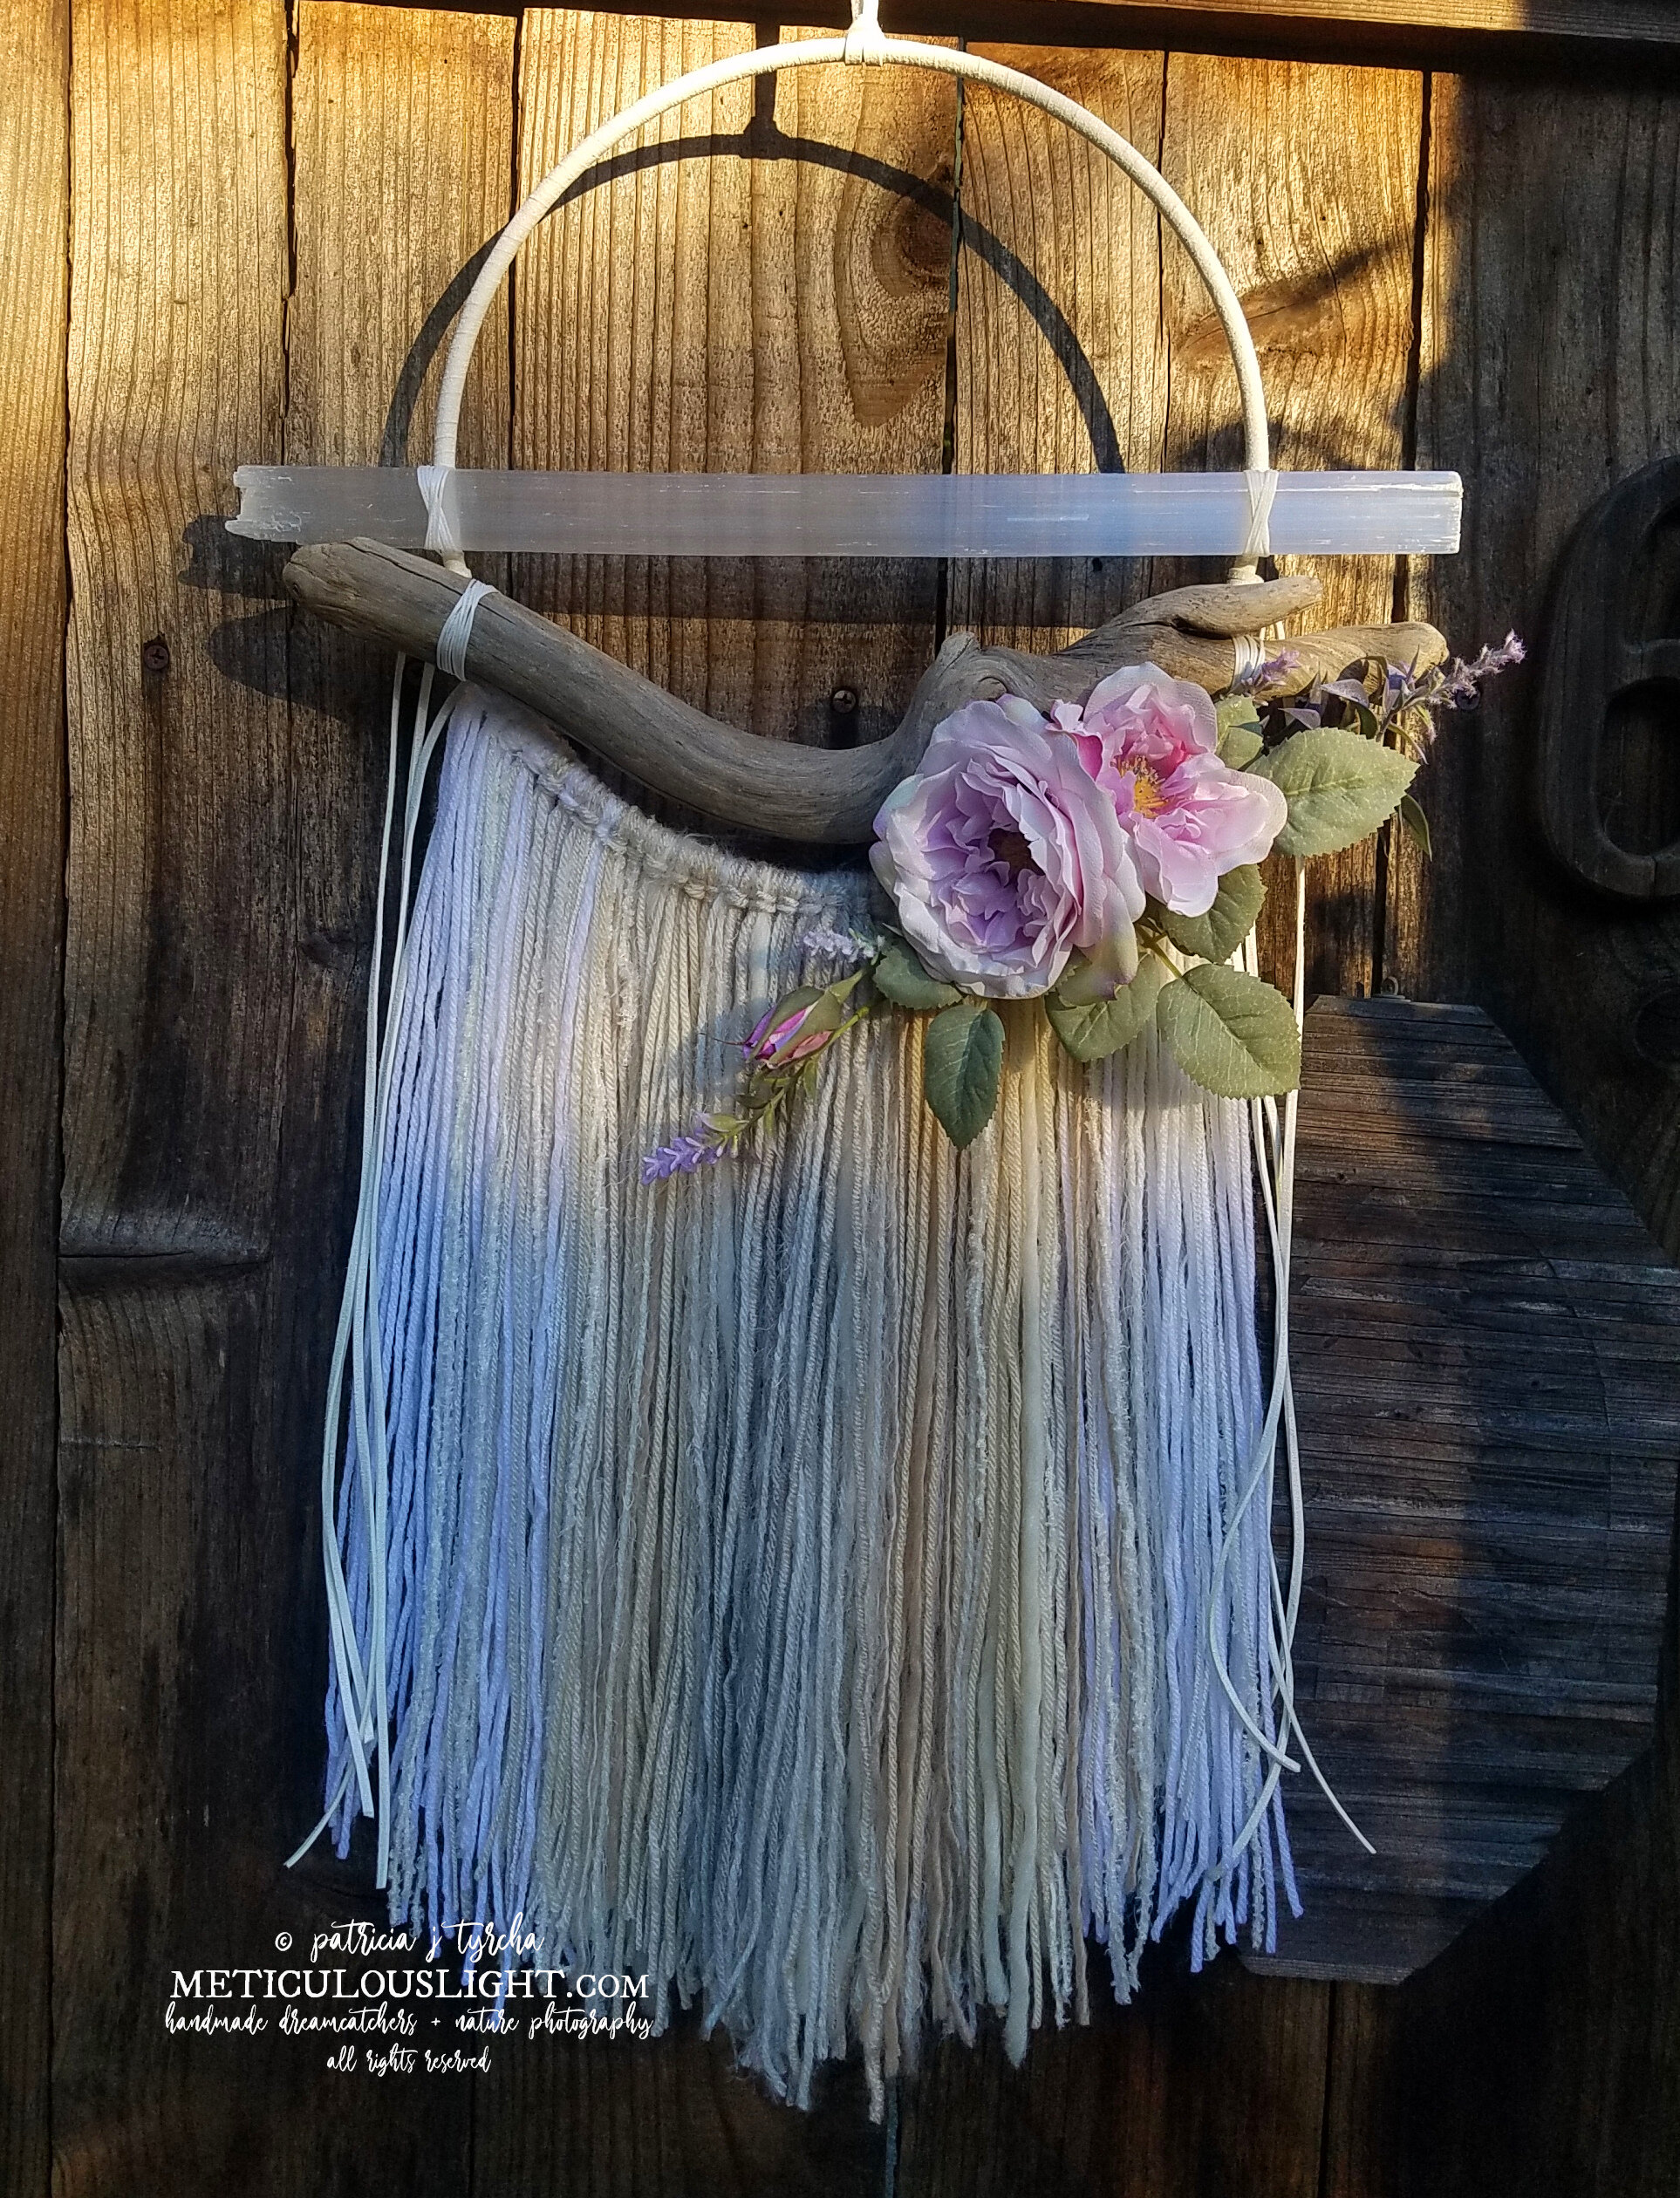 © patricia j tyrcha Selenite Wand, Driftwood, Purple Flowers yarn hang dream catcher, modern, clean, grounding, Bohemian ALL RIGHTS RESERVED5.jpg